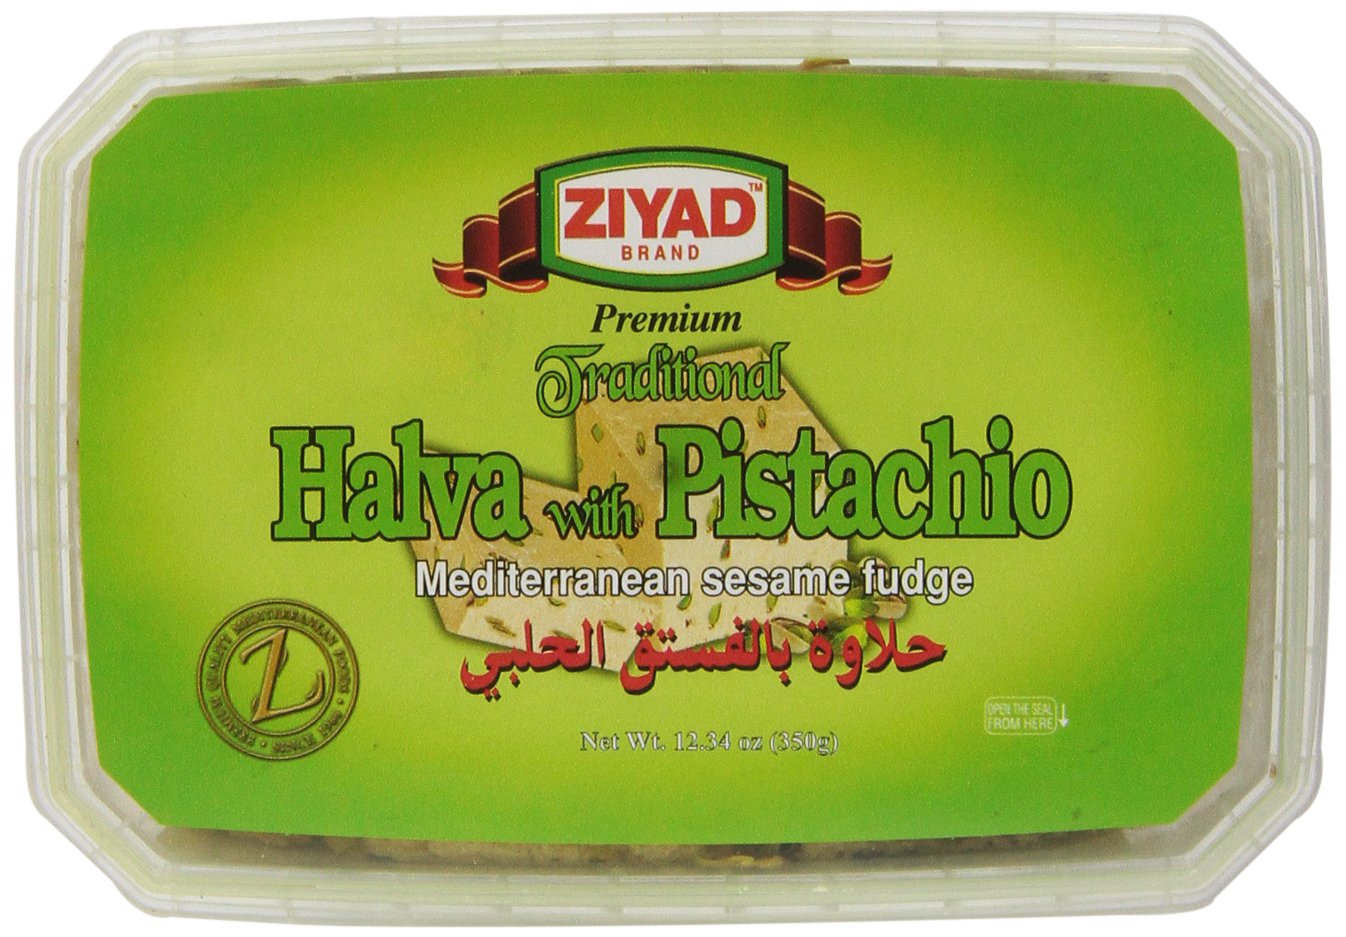 ziyad-halva-w-pistachio-34-oz-350g-plastic-box